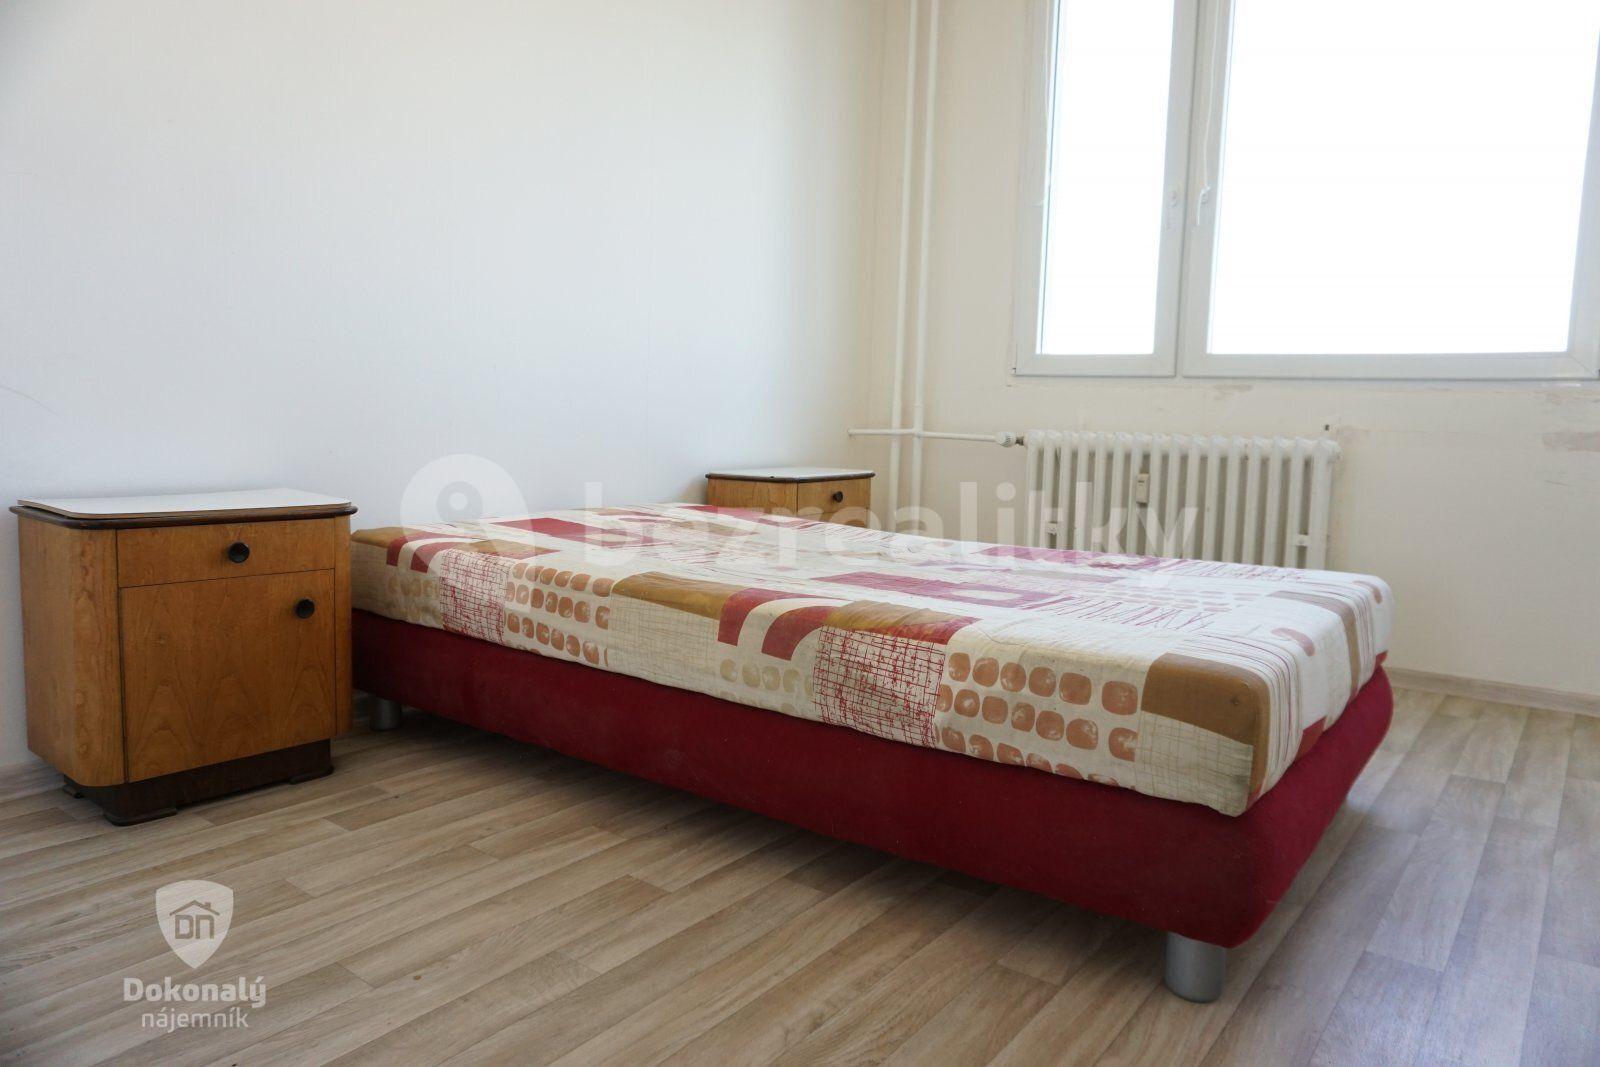 3 bedroom with open-plan kitchen flat to rent, 68 m², Novoborská, Prague, Prague